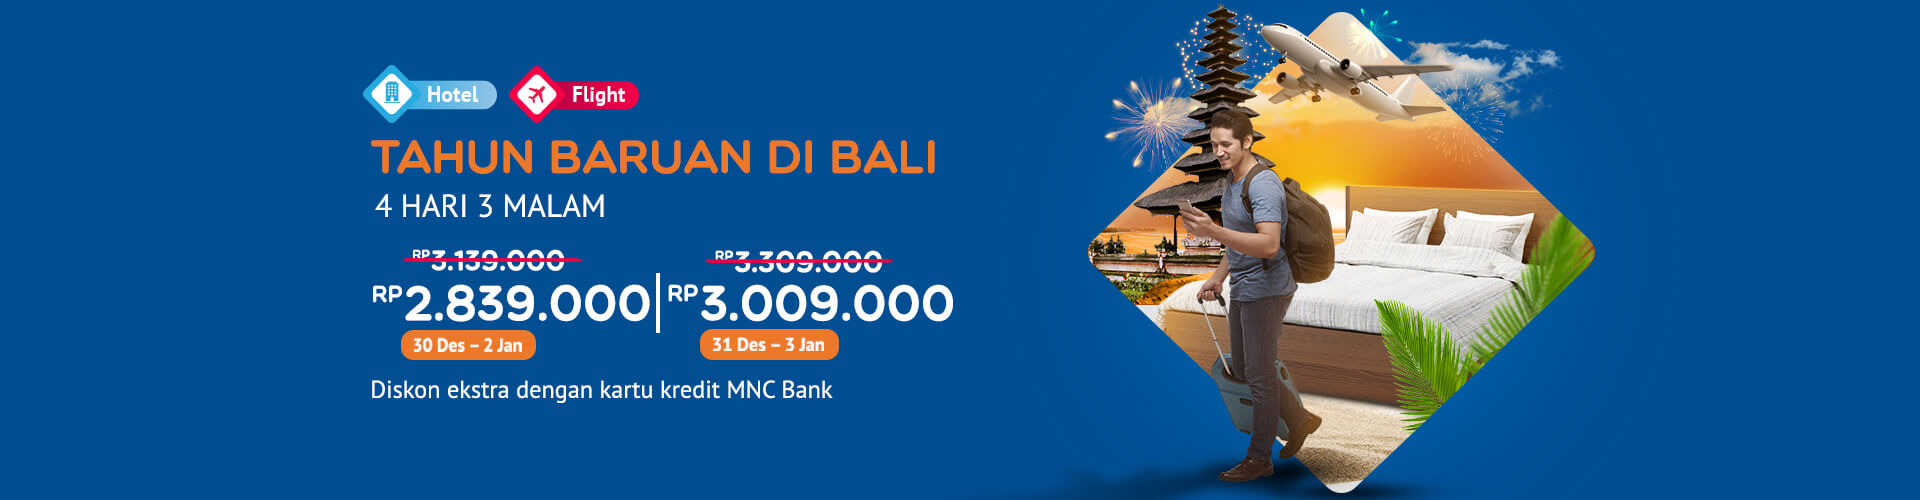 New Year Bali 4H3M